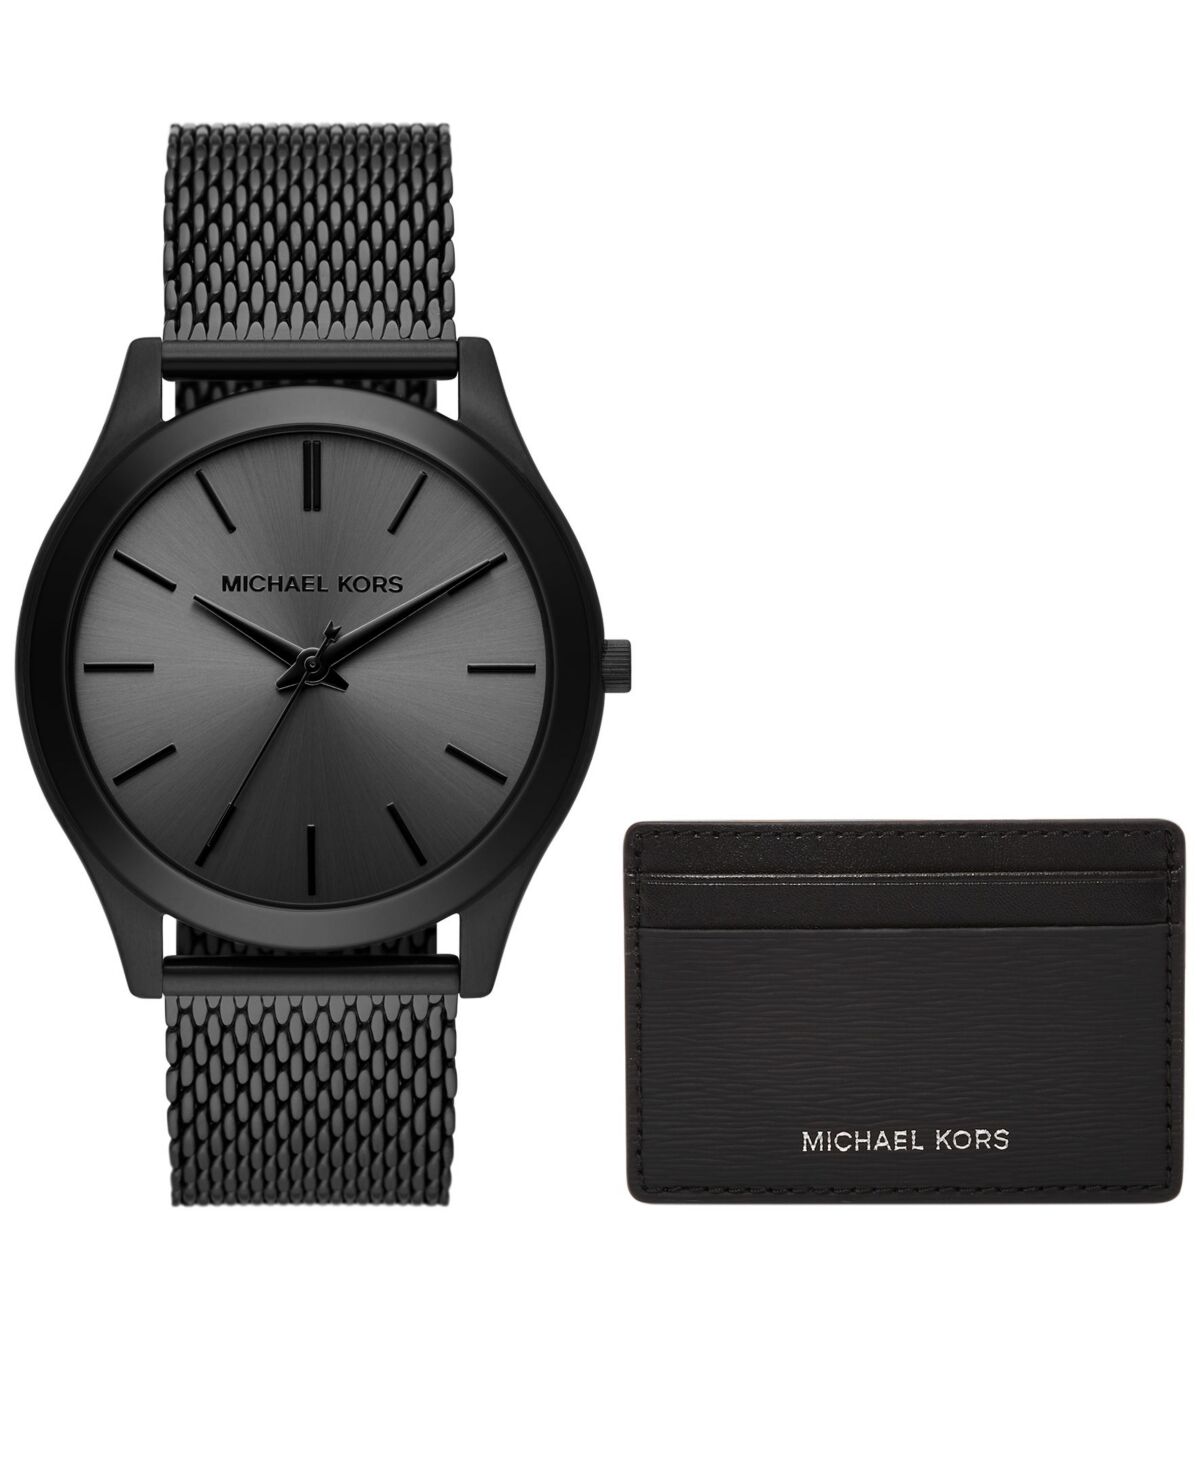 Michael Kors Men's Runway Three-Hand Black Stainless Steel Mesh Watch 44mm and Wallet Gift Set - Black